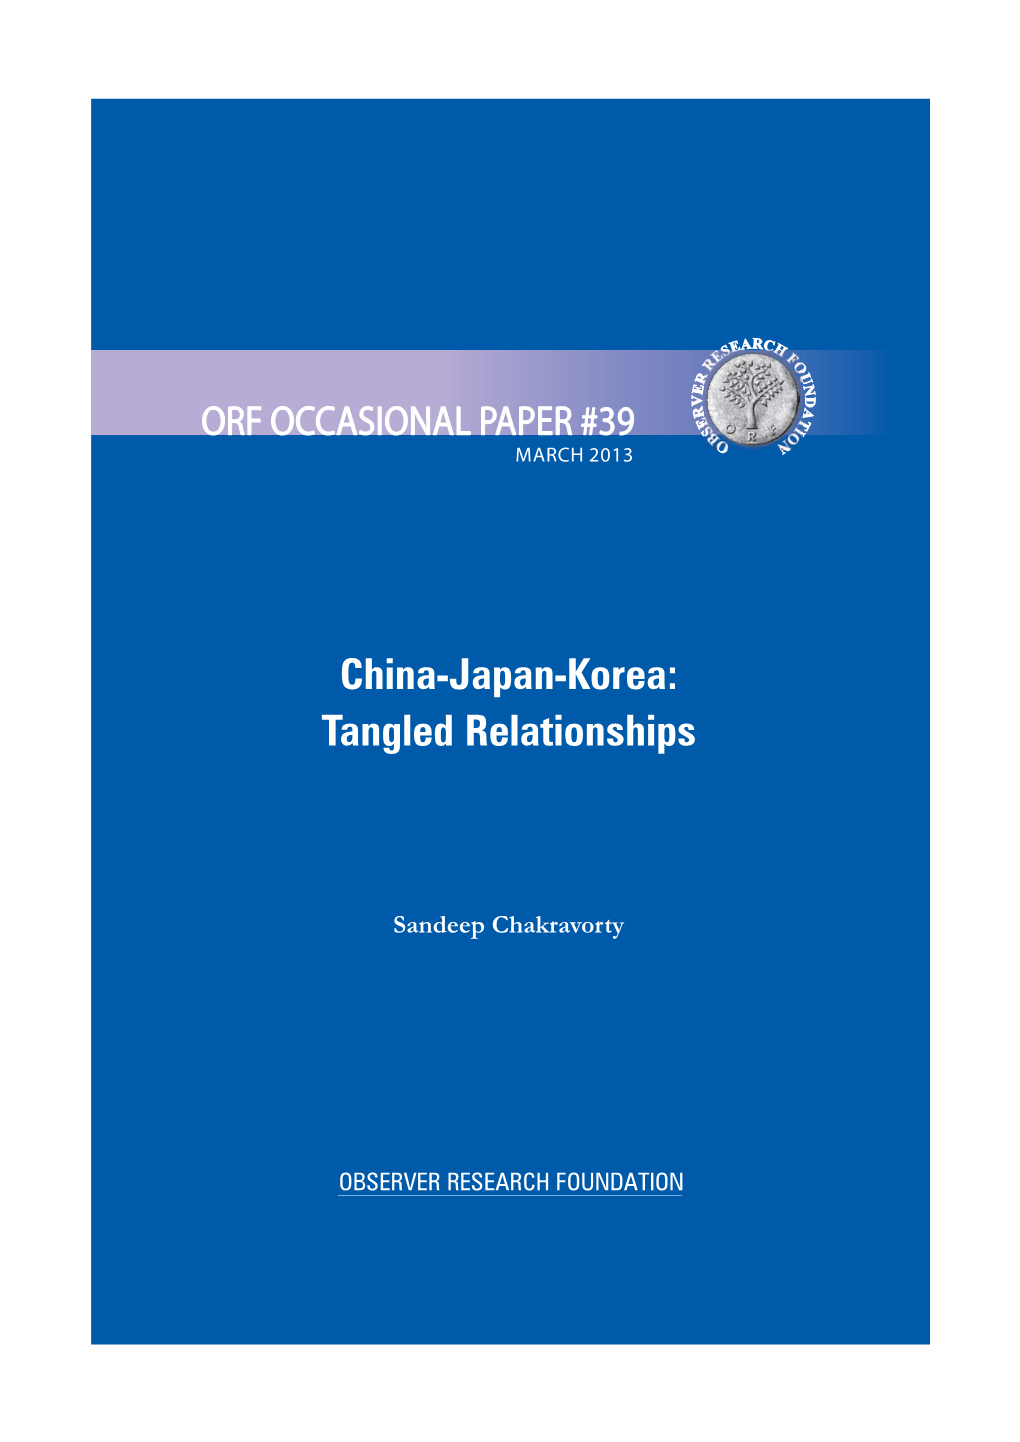 China-Japan-Korea: Tangled Relationships